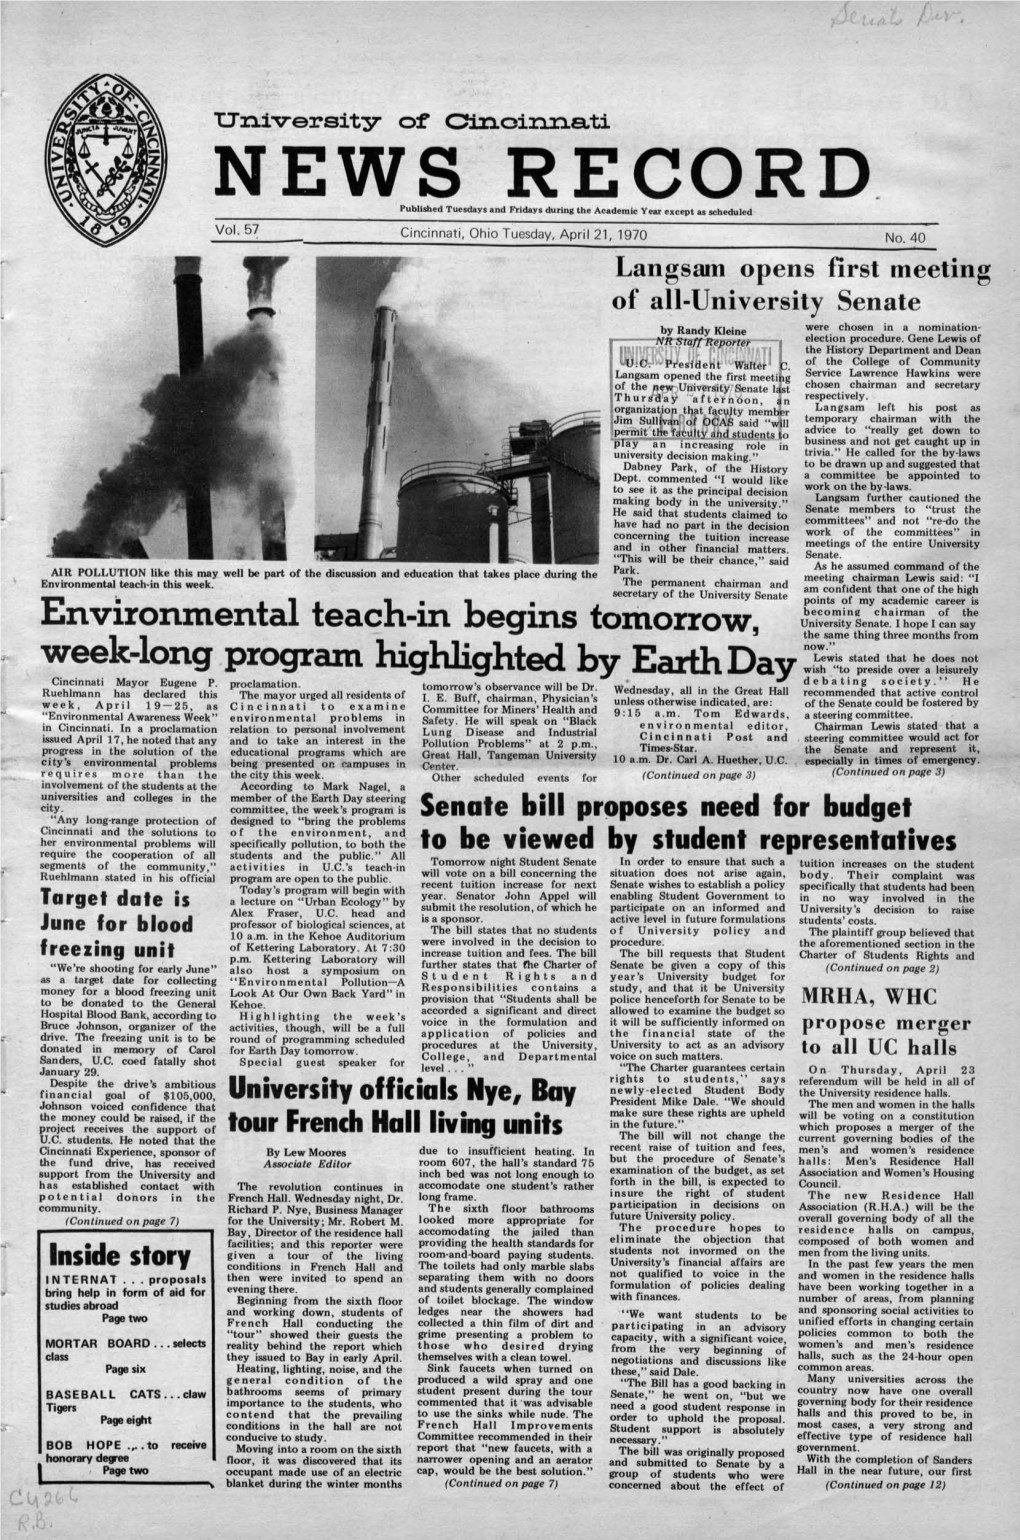 University of Cincinnati News Record. Tuesday, April 21, 1970. Vol. LVII